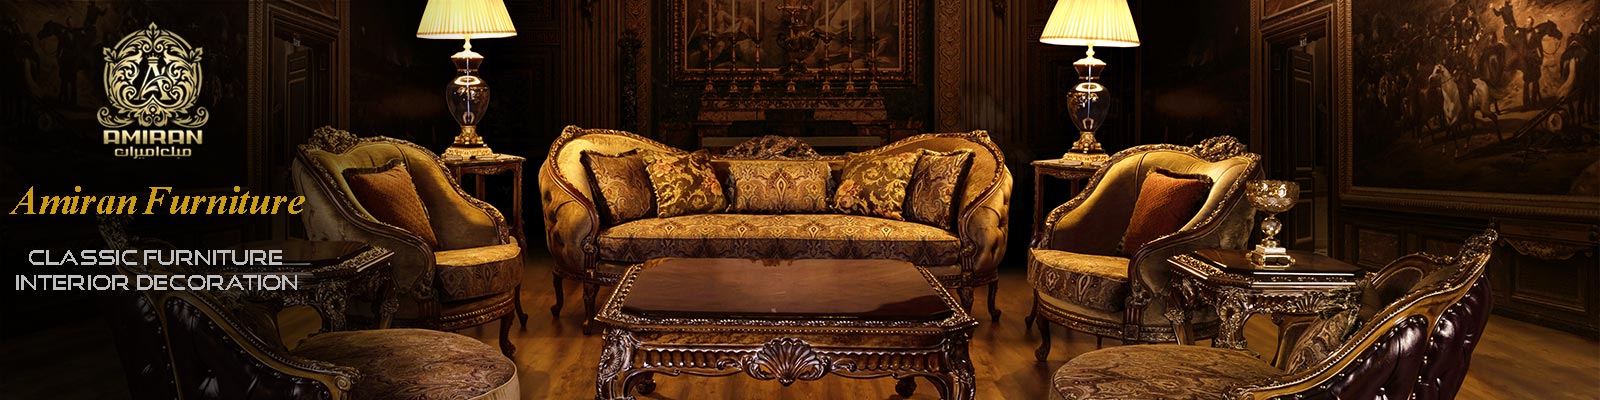 Amiran furniture